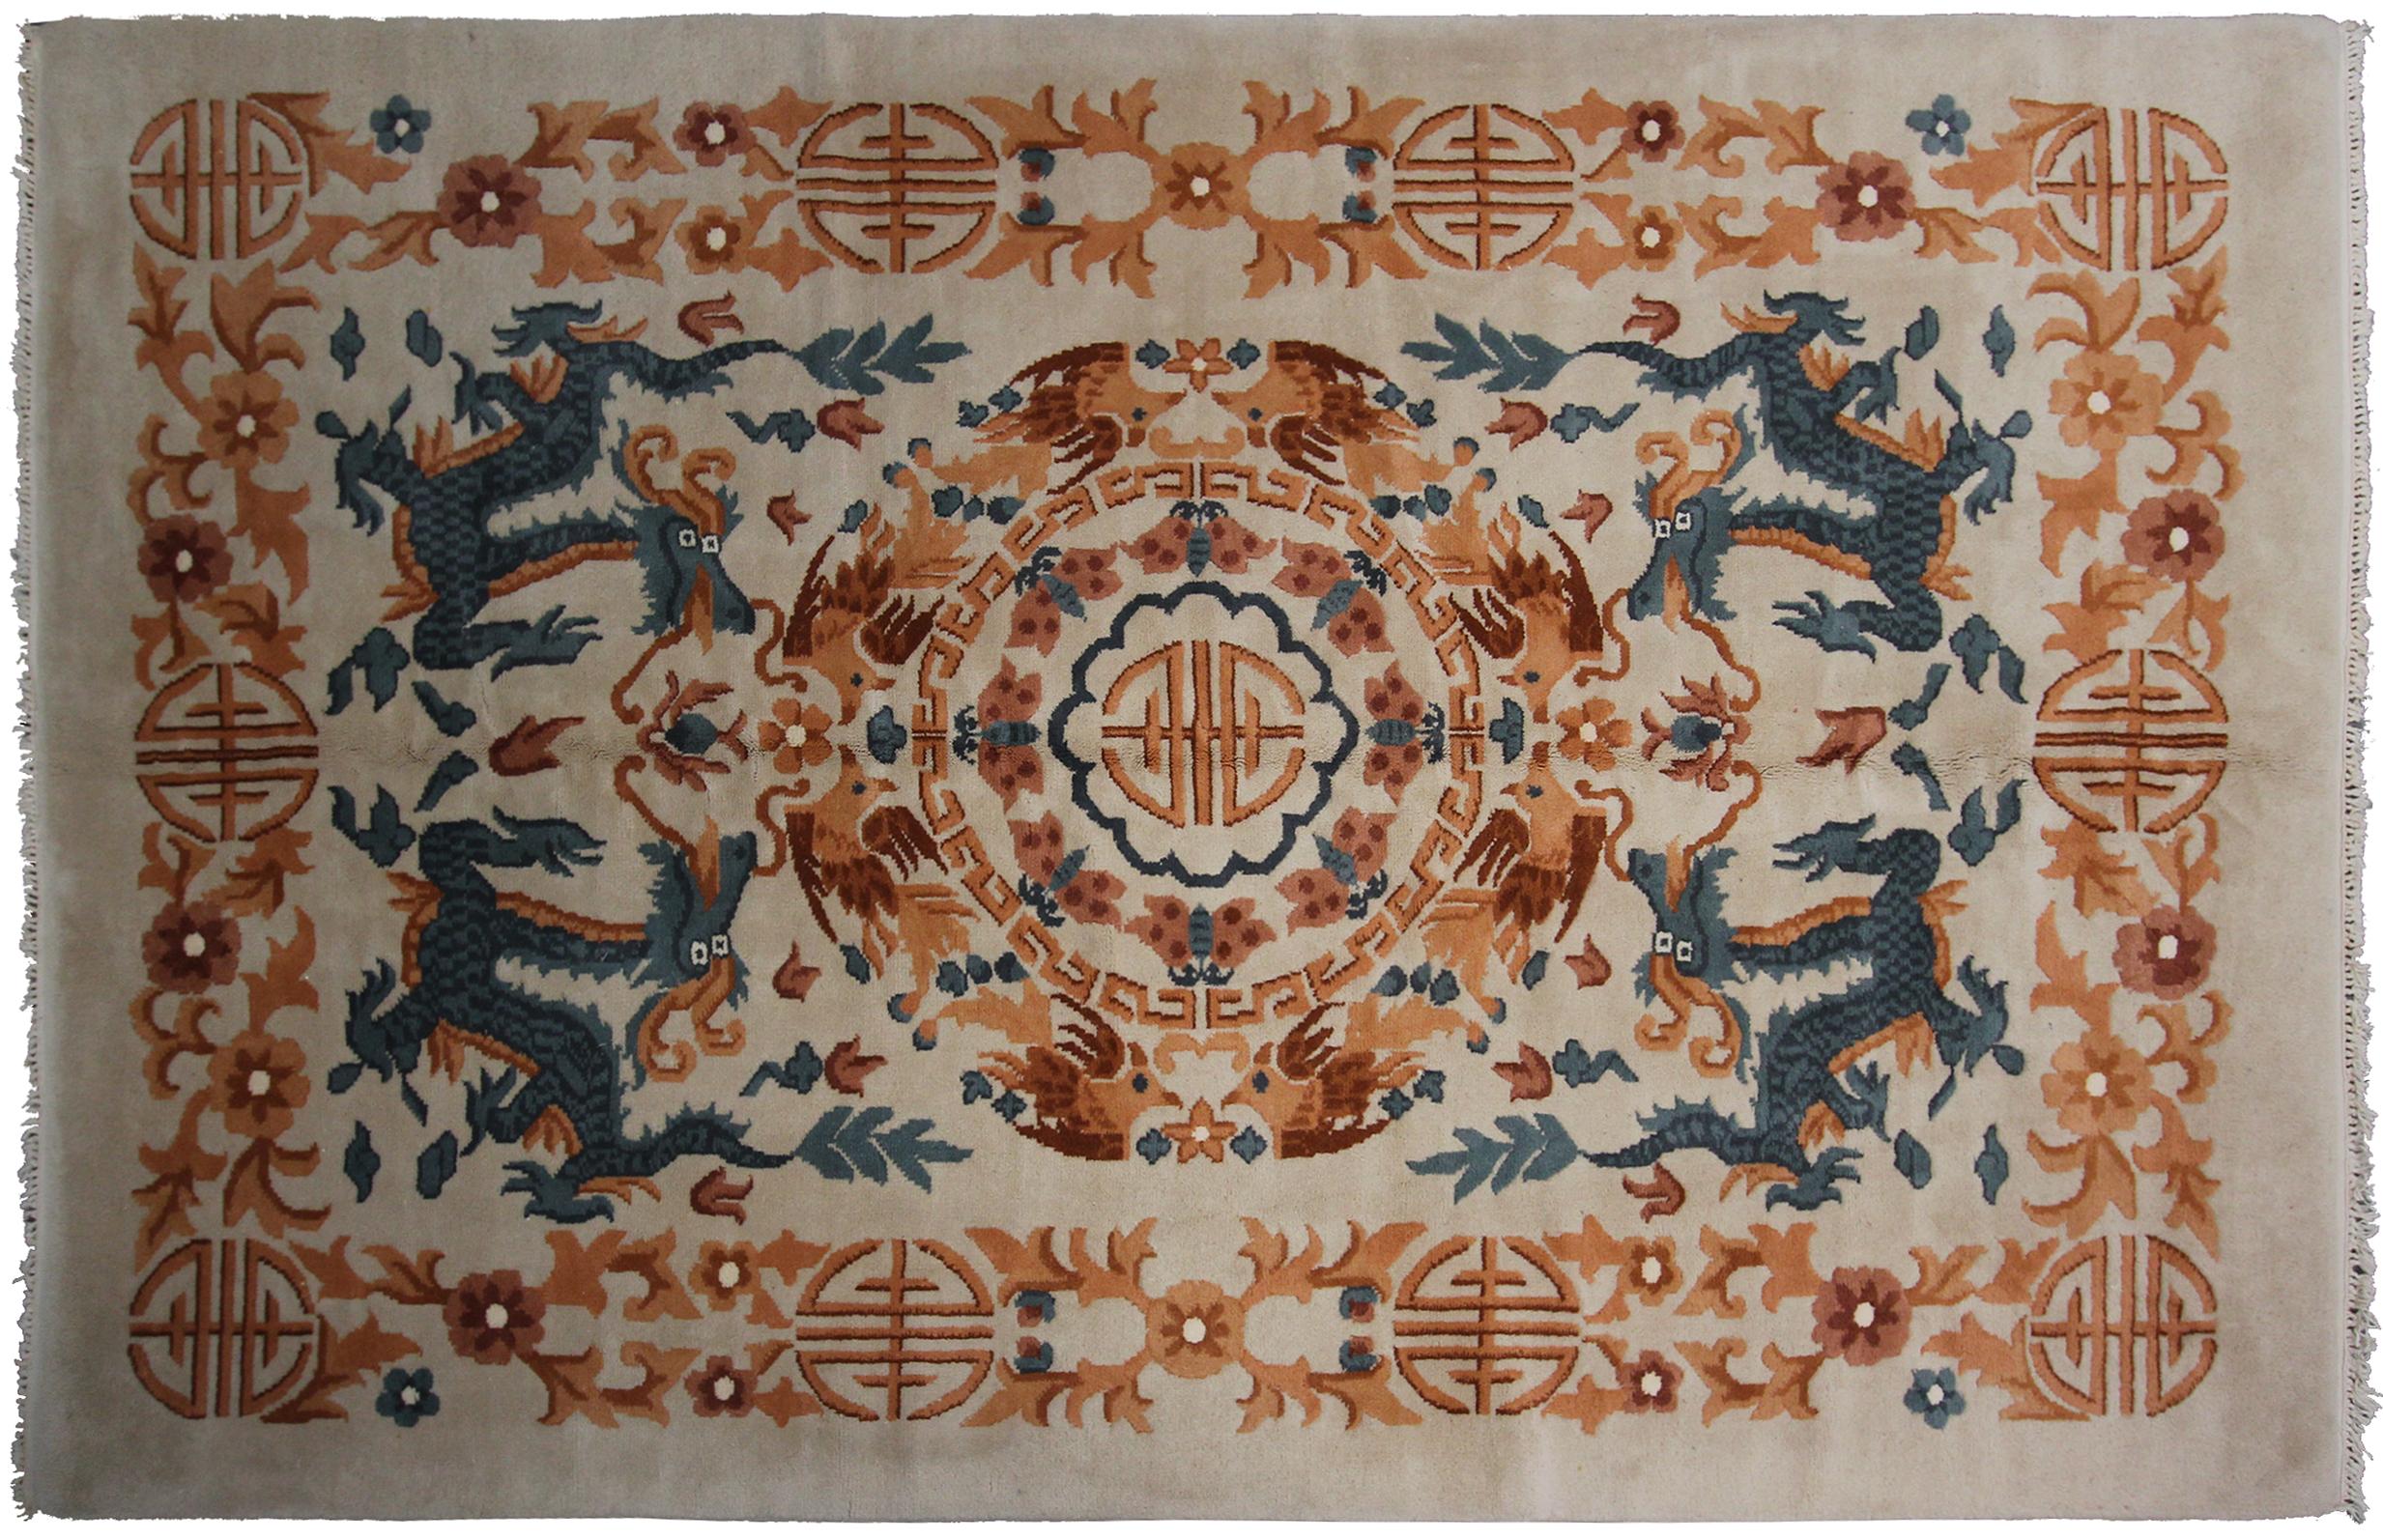 Vintage Art Deco Teppich 9x12 Drachen Chinesischer Teppich Elfenbeinteppich 6x9 Chinesischer Teppich

1960

5'10